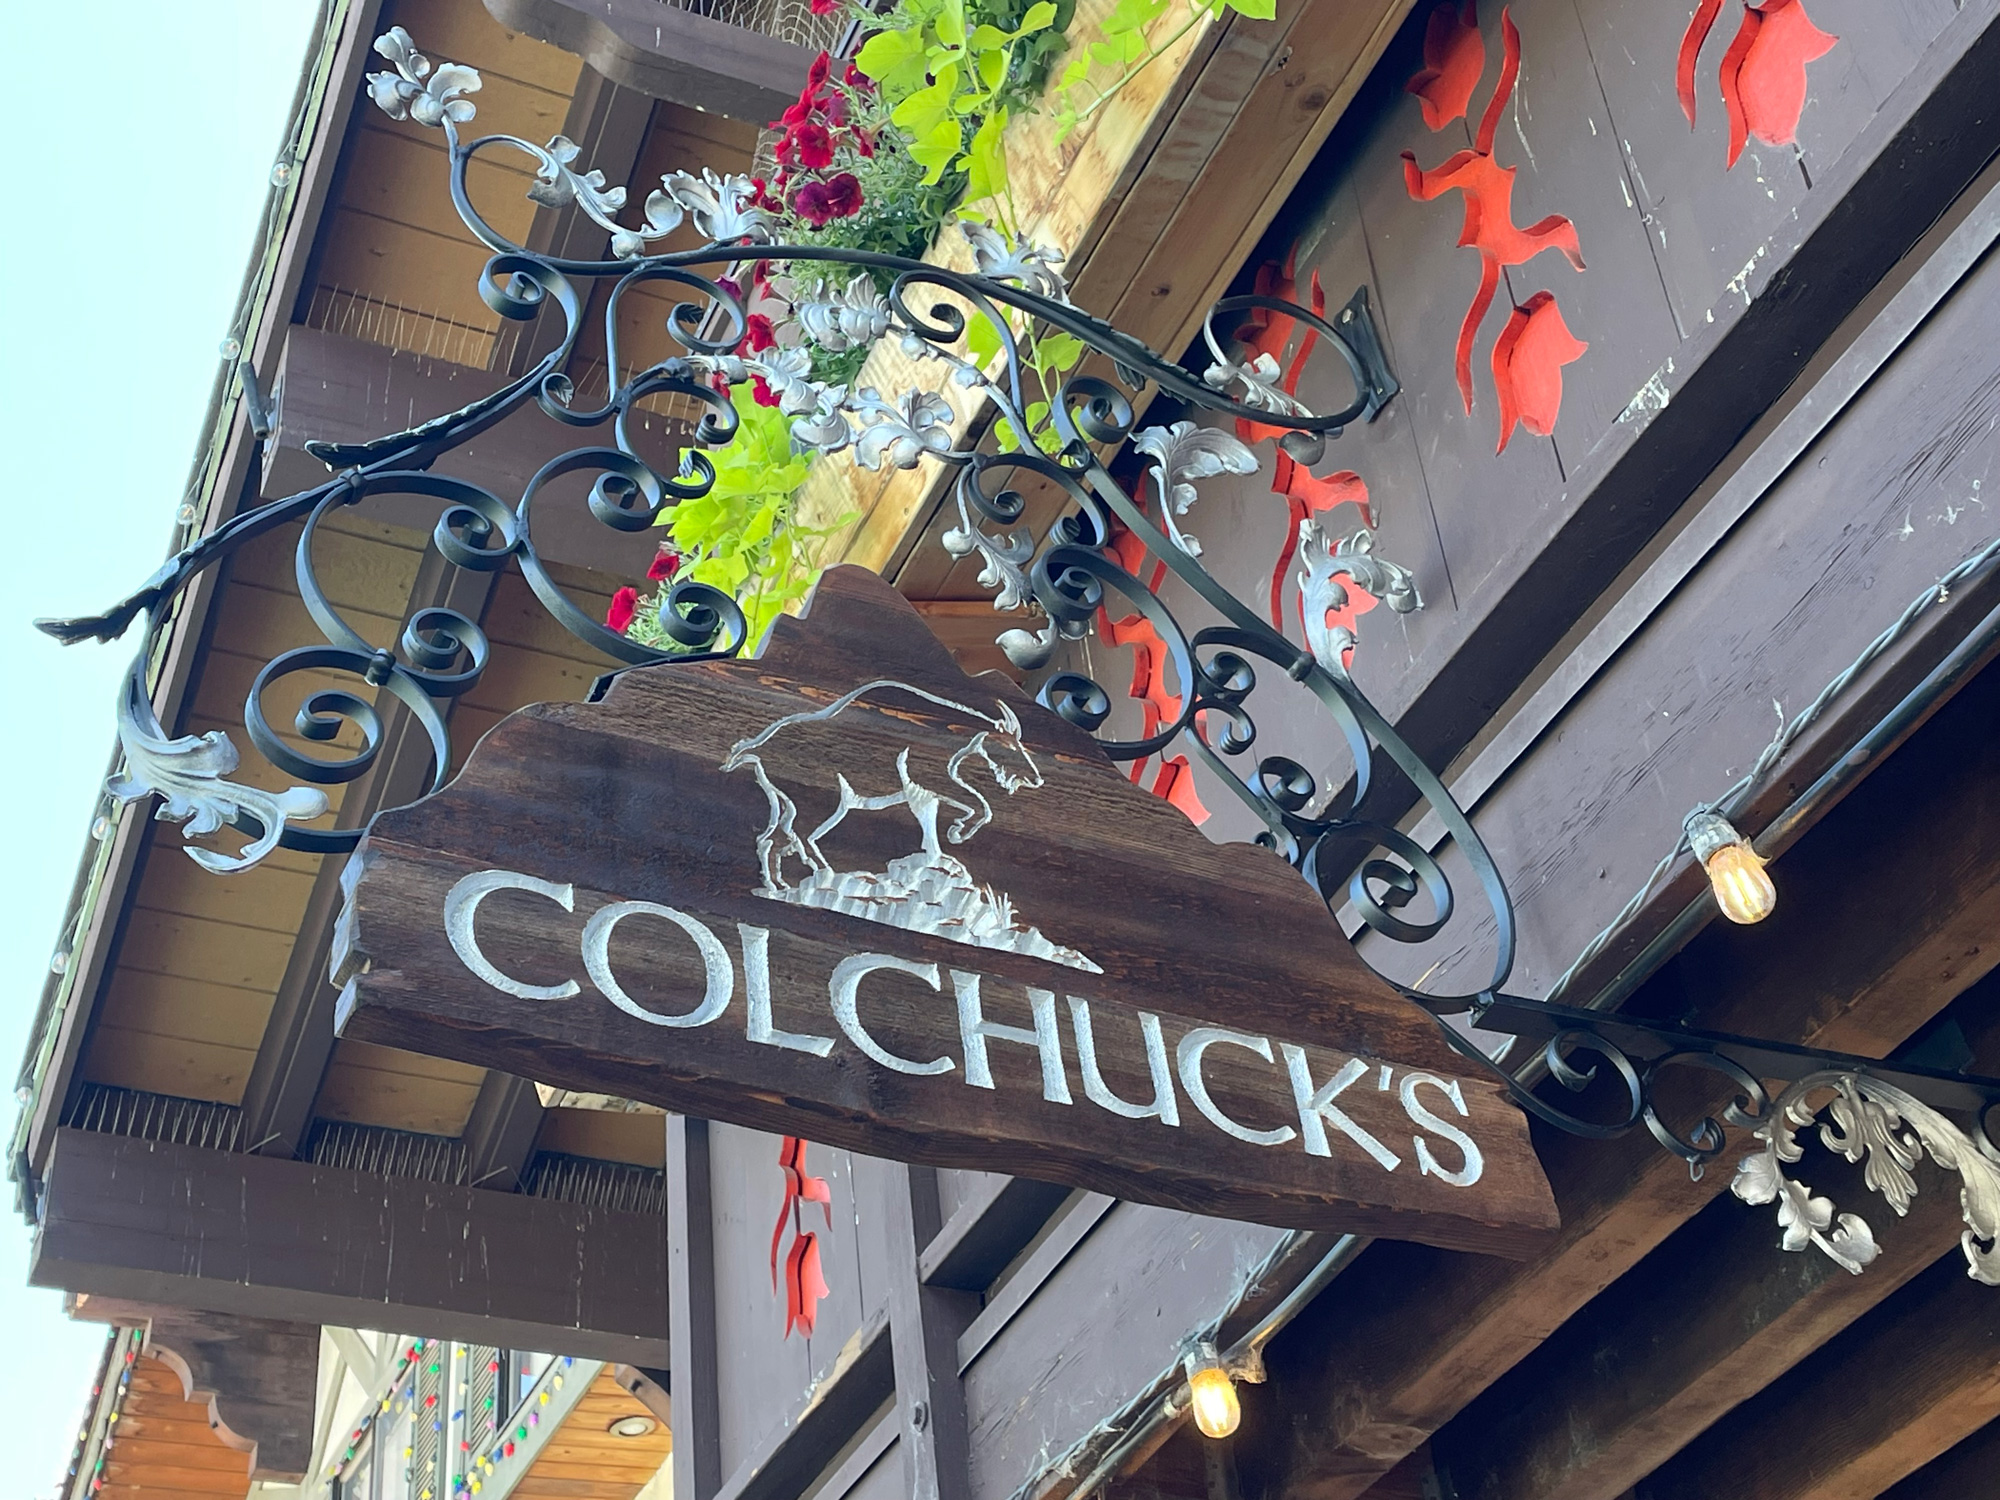 Colechucks